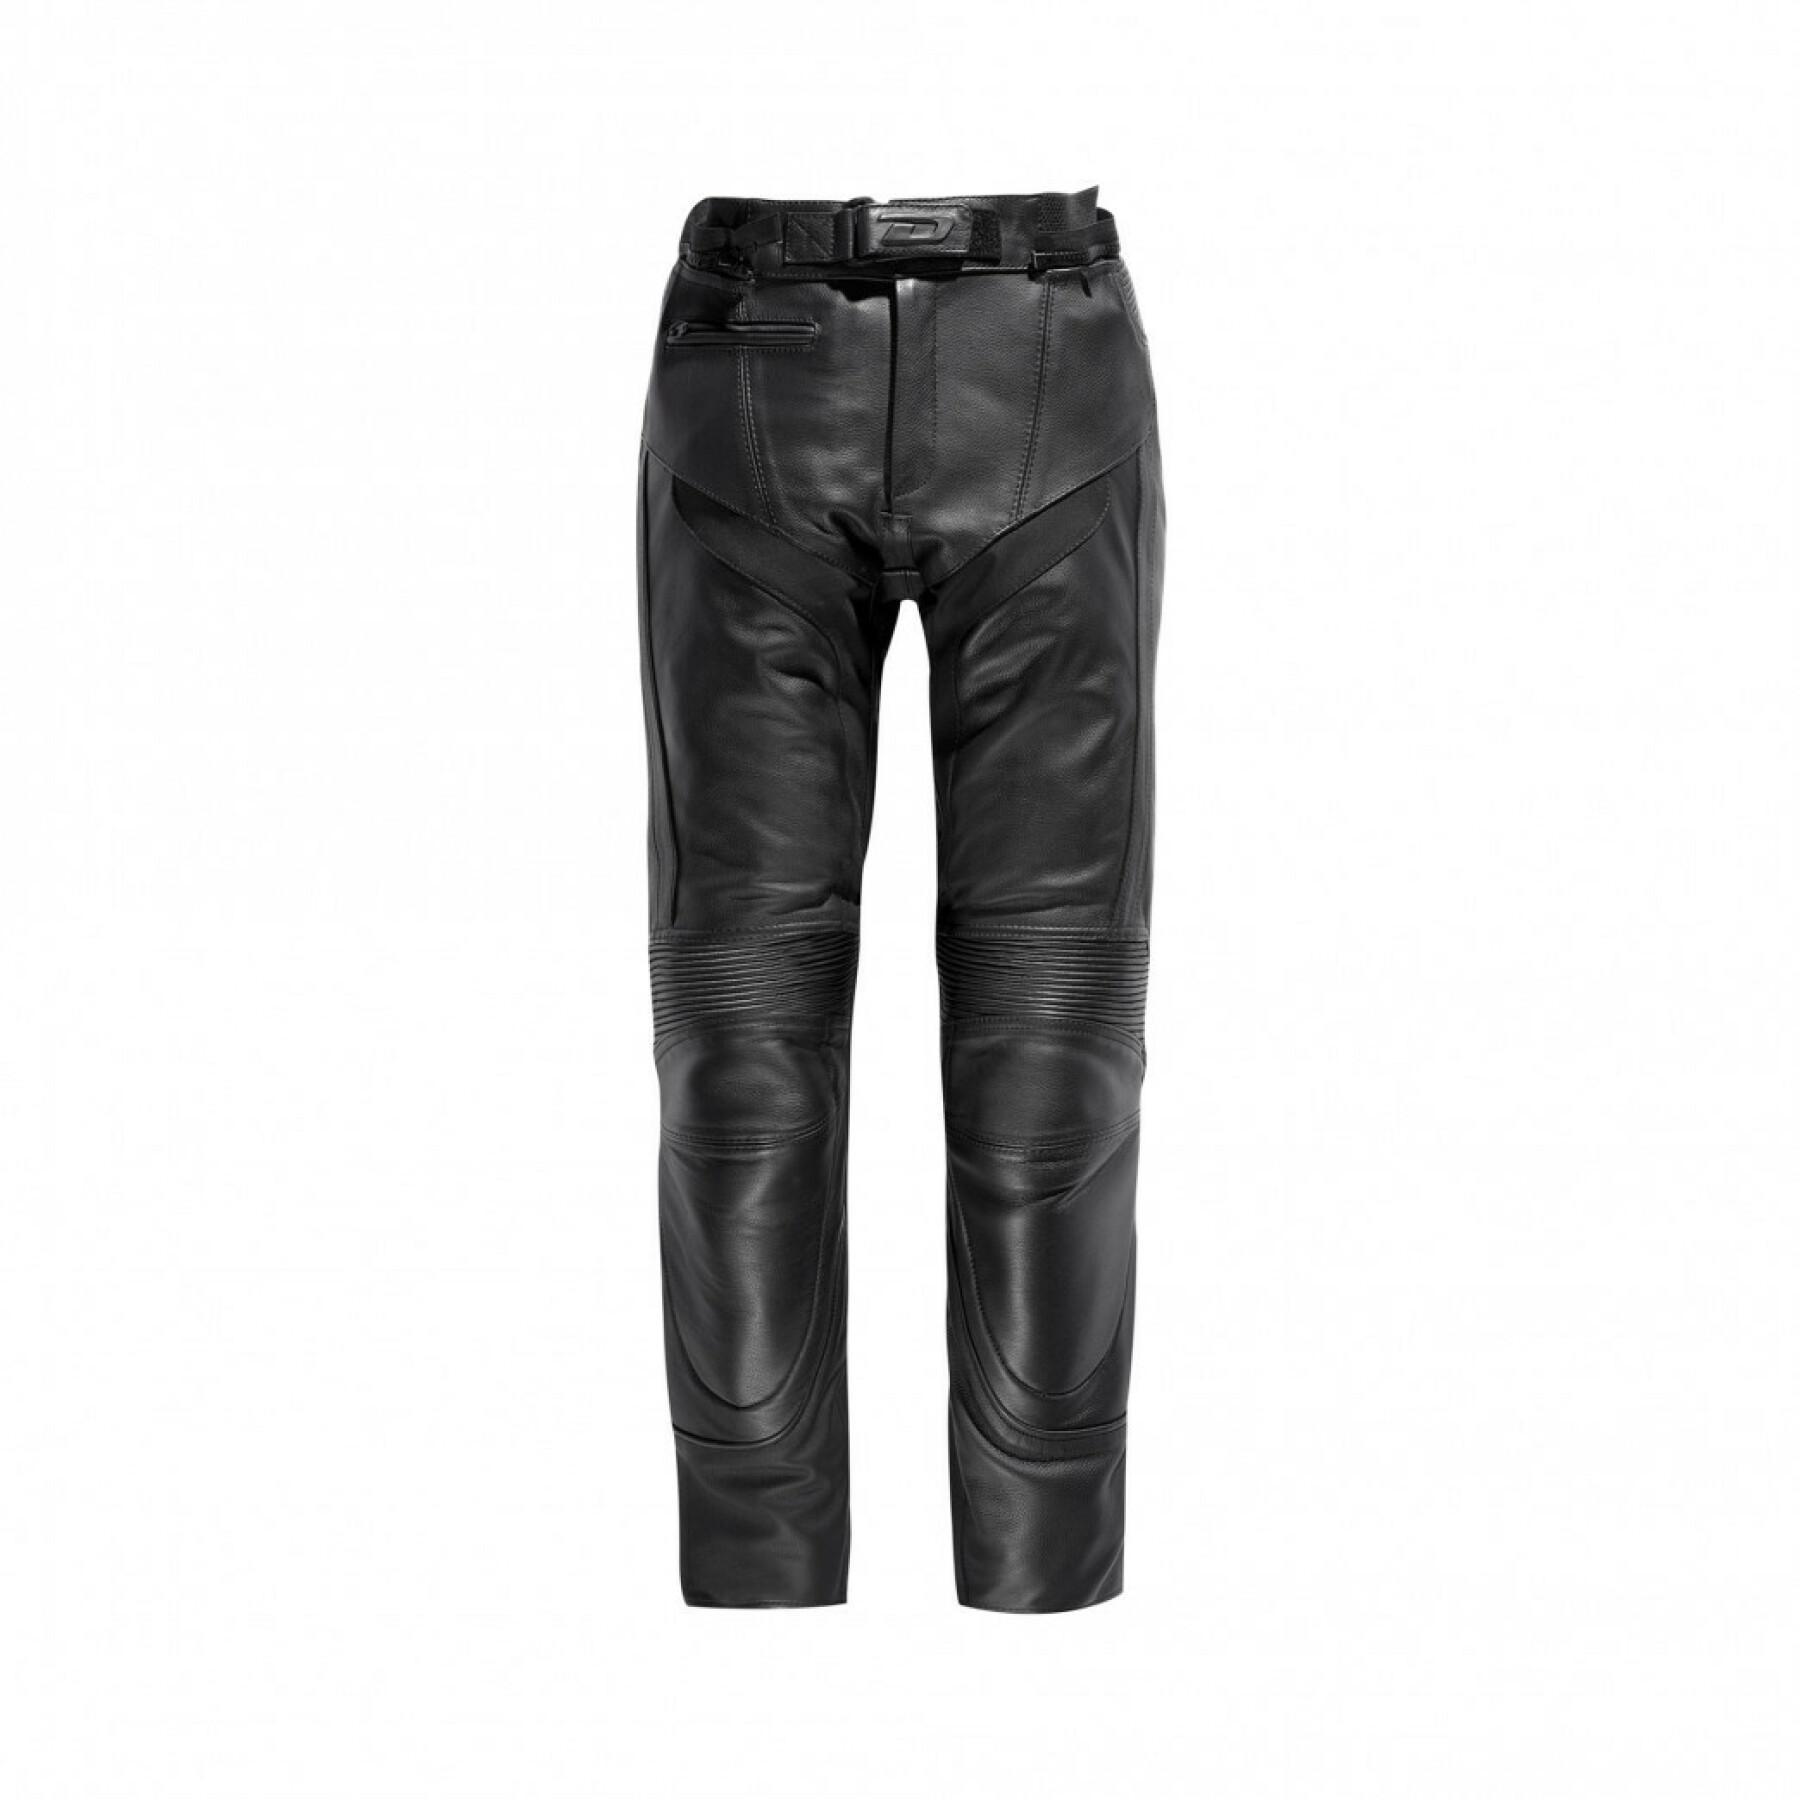 Leather motorcycle pants for women Difi Mondello